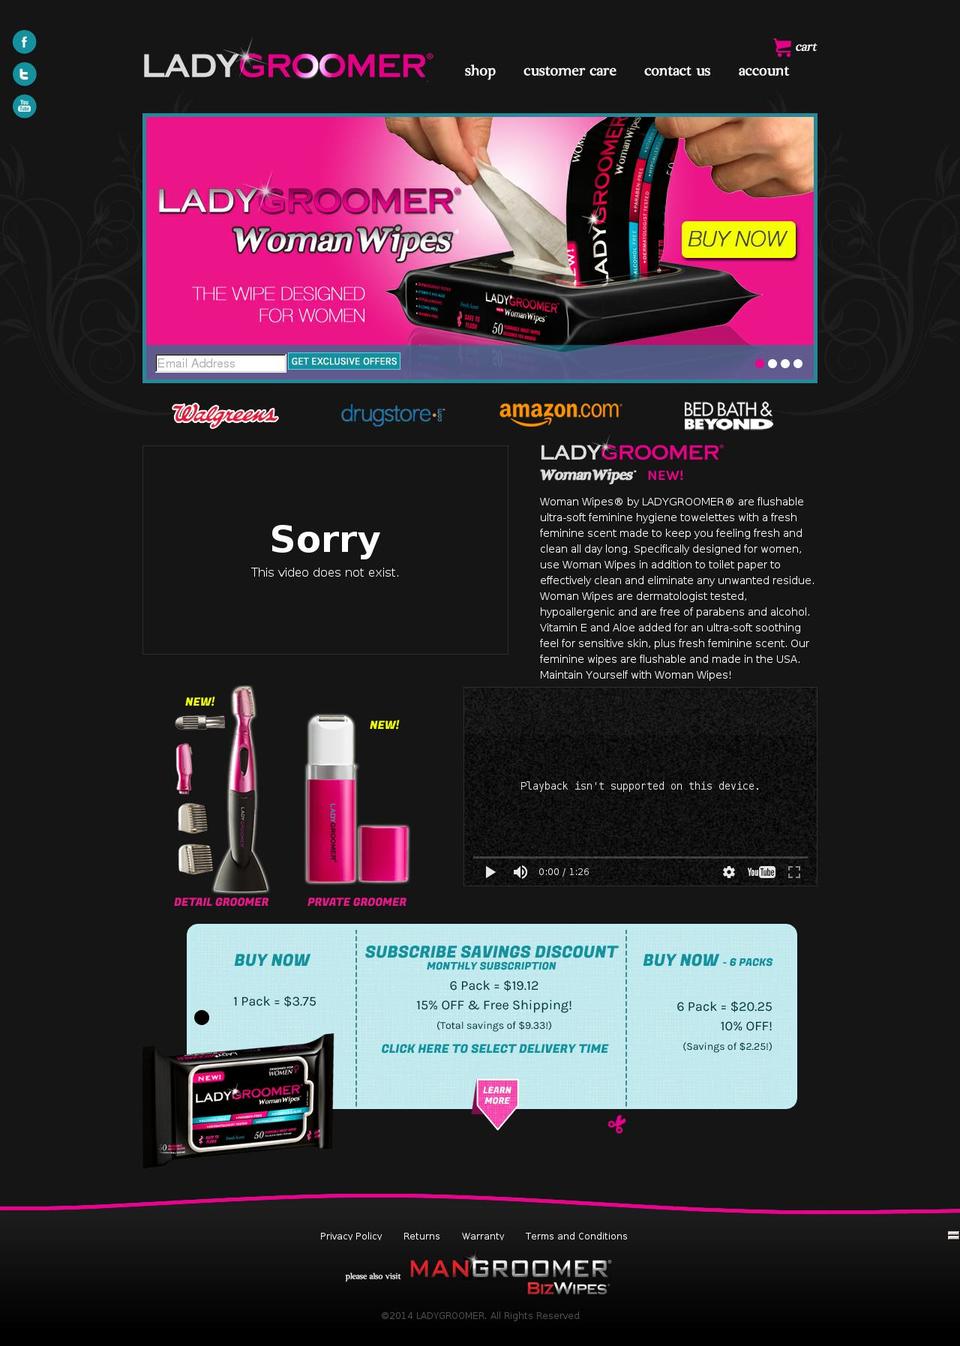 ladygroom.de shopify website screenshot